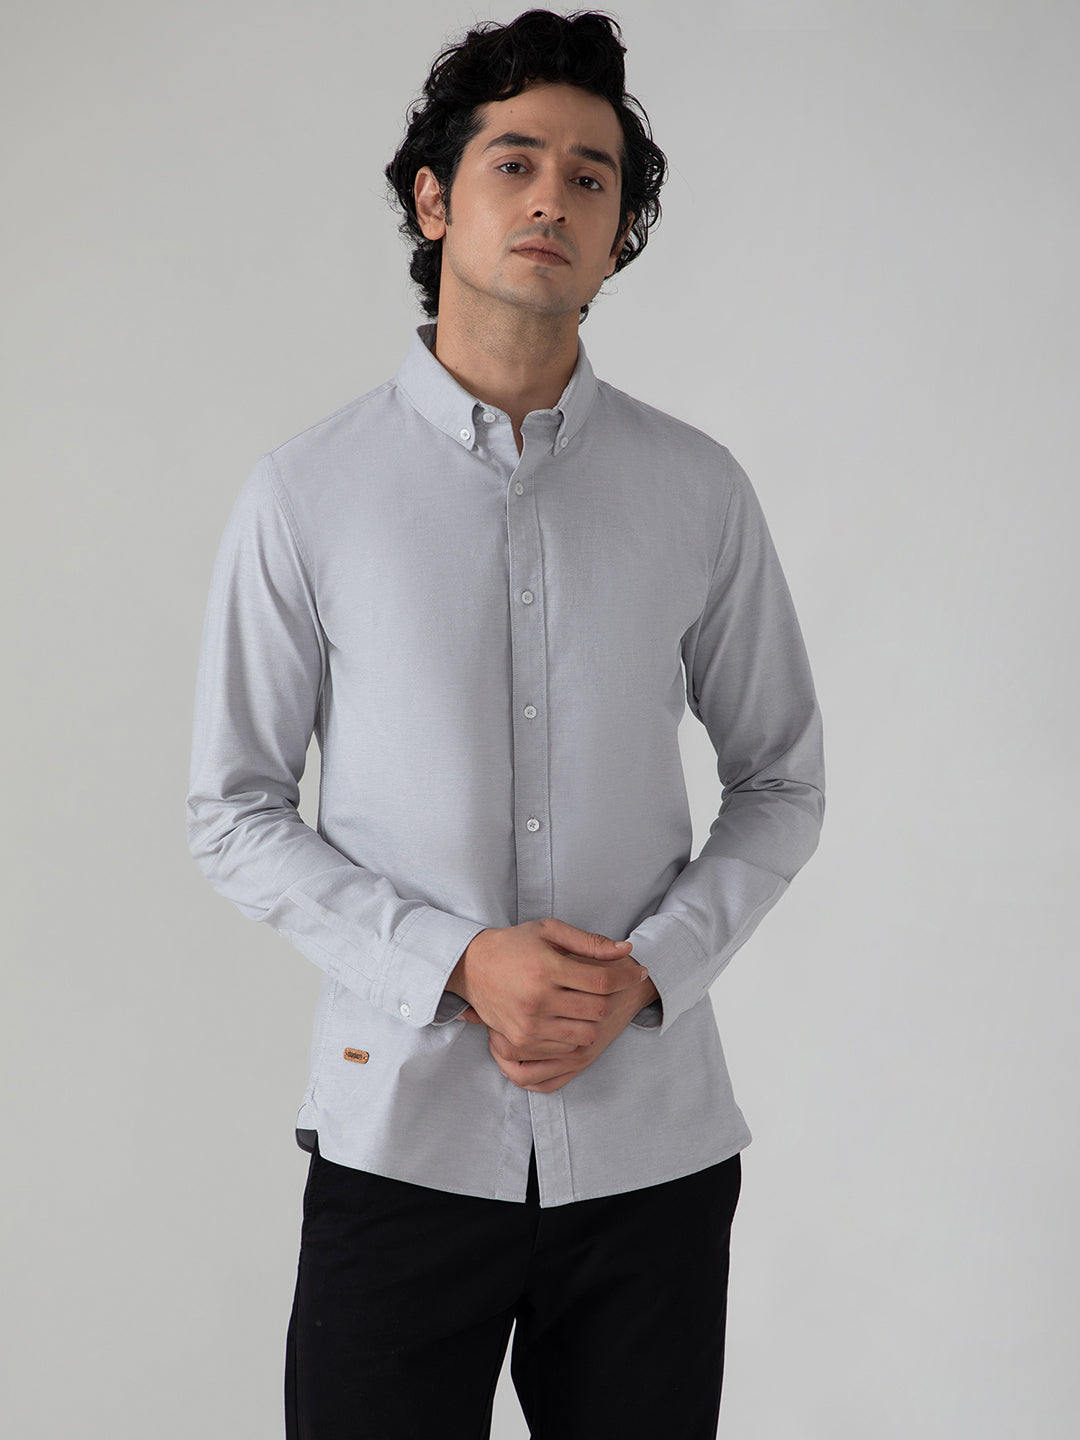 2 Way Stretch Oxford Shirt in Light Grey- Slim Fit